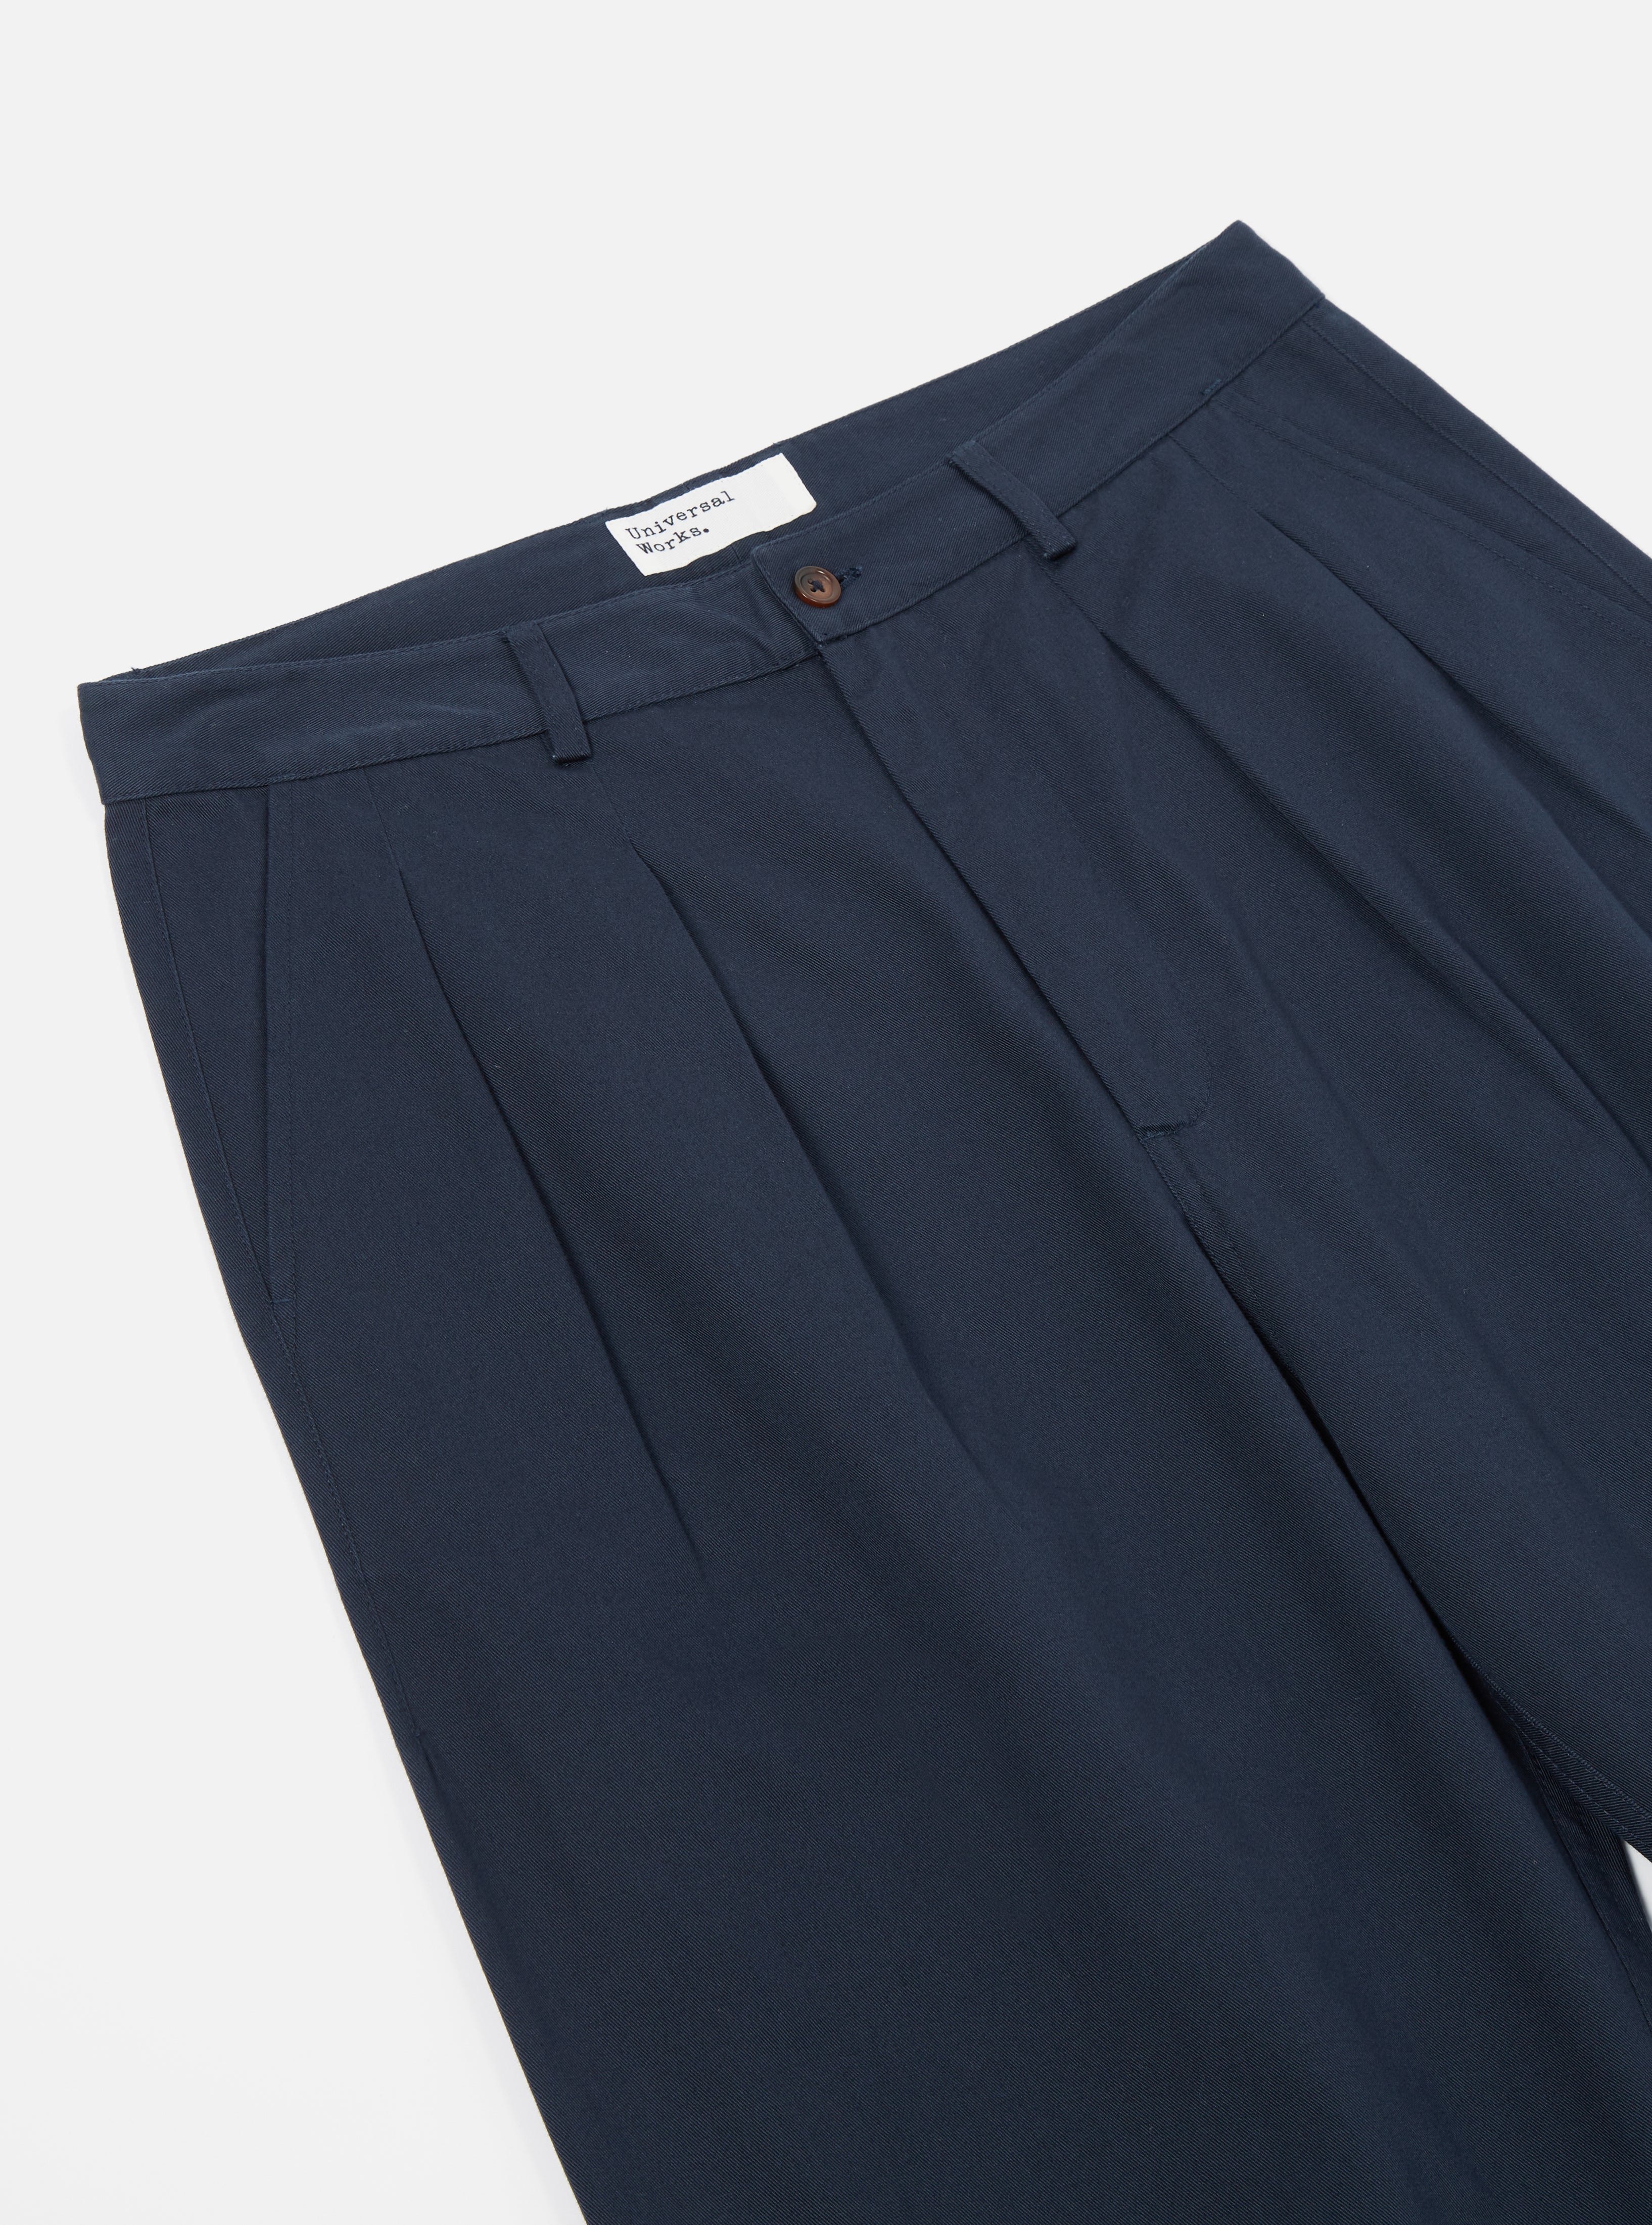 New Look double pleat front smart pants in khaki | ASOS